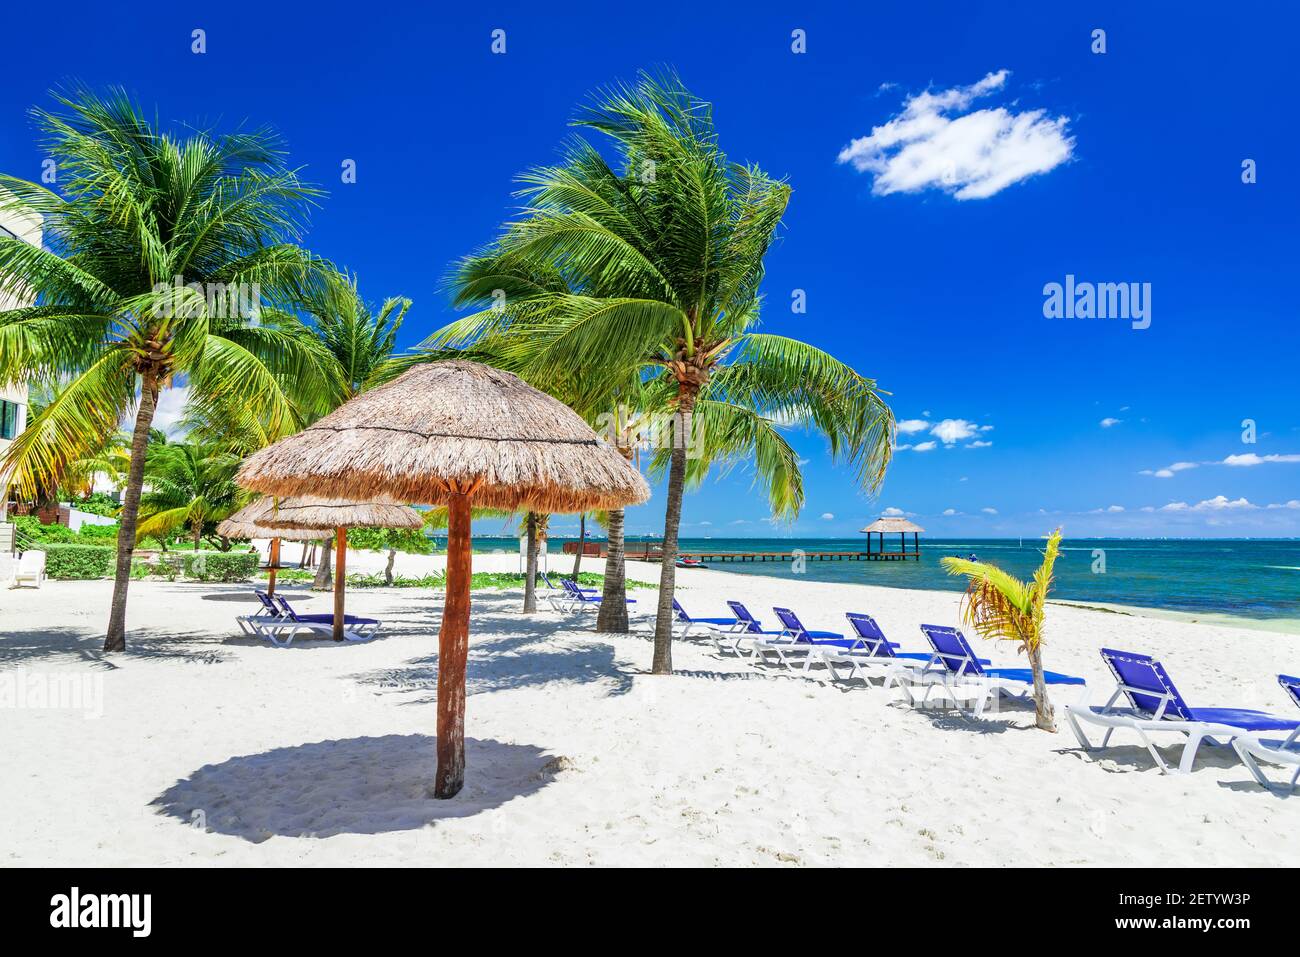 Cancun, Mexiko - tropische Landschaft mit Kokospalmen Karibischer Strand Yucatan Peninsula in Mittelamerika Stockfoto